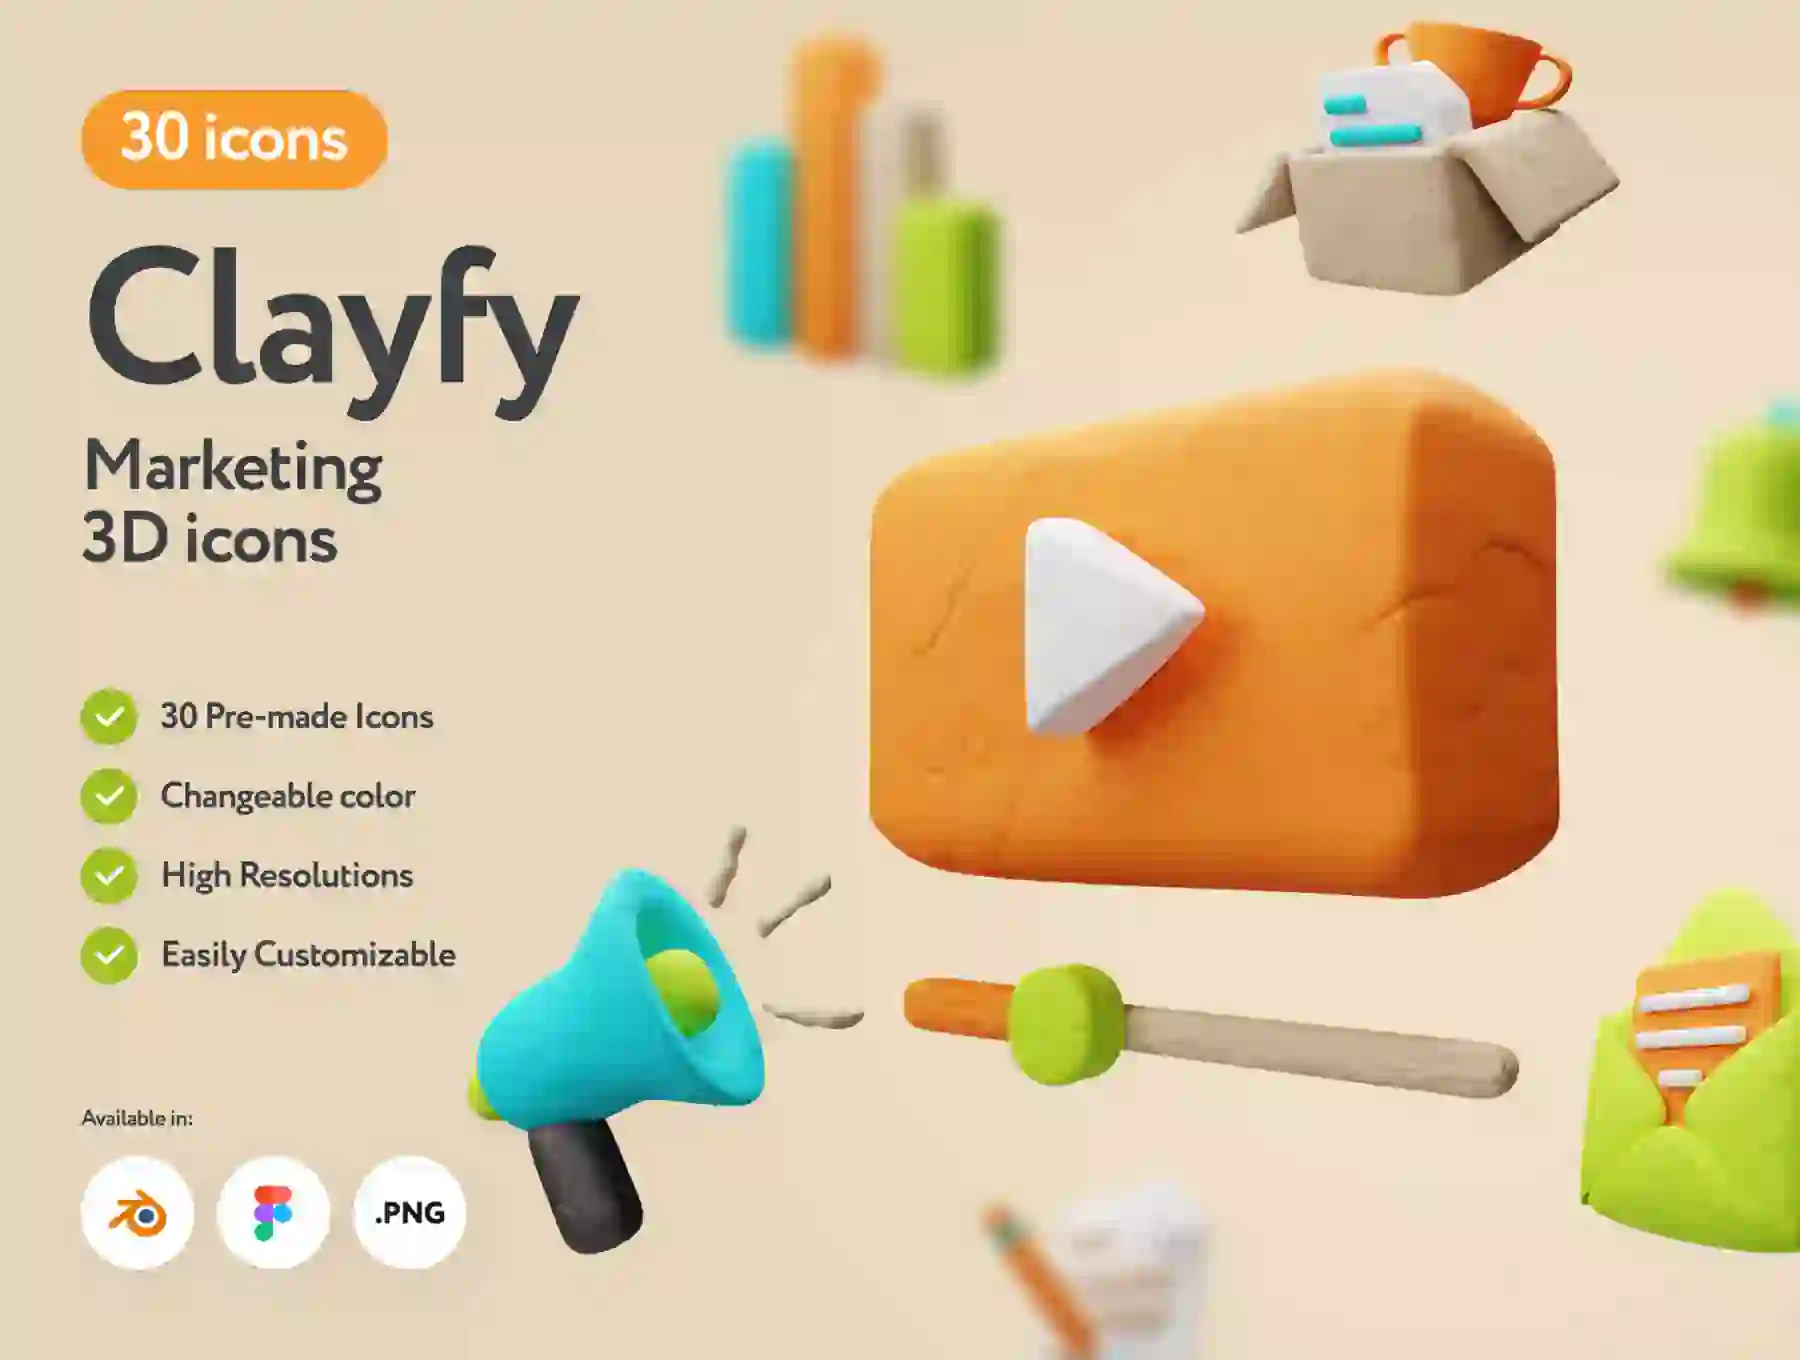 Clayfy Marketing 3D Icons